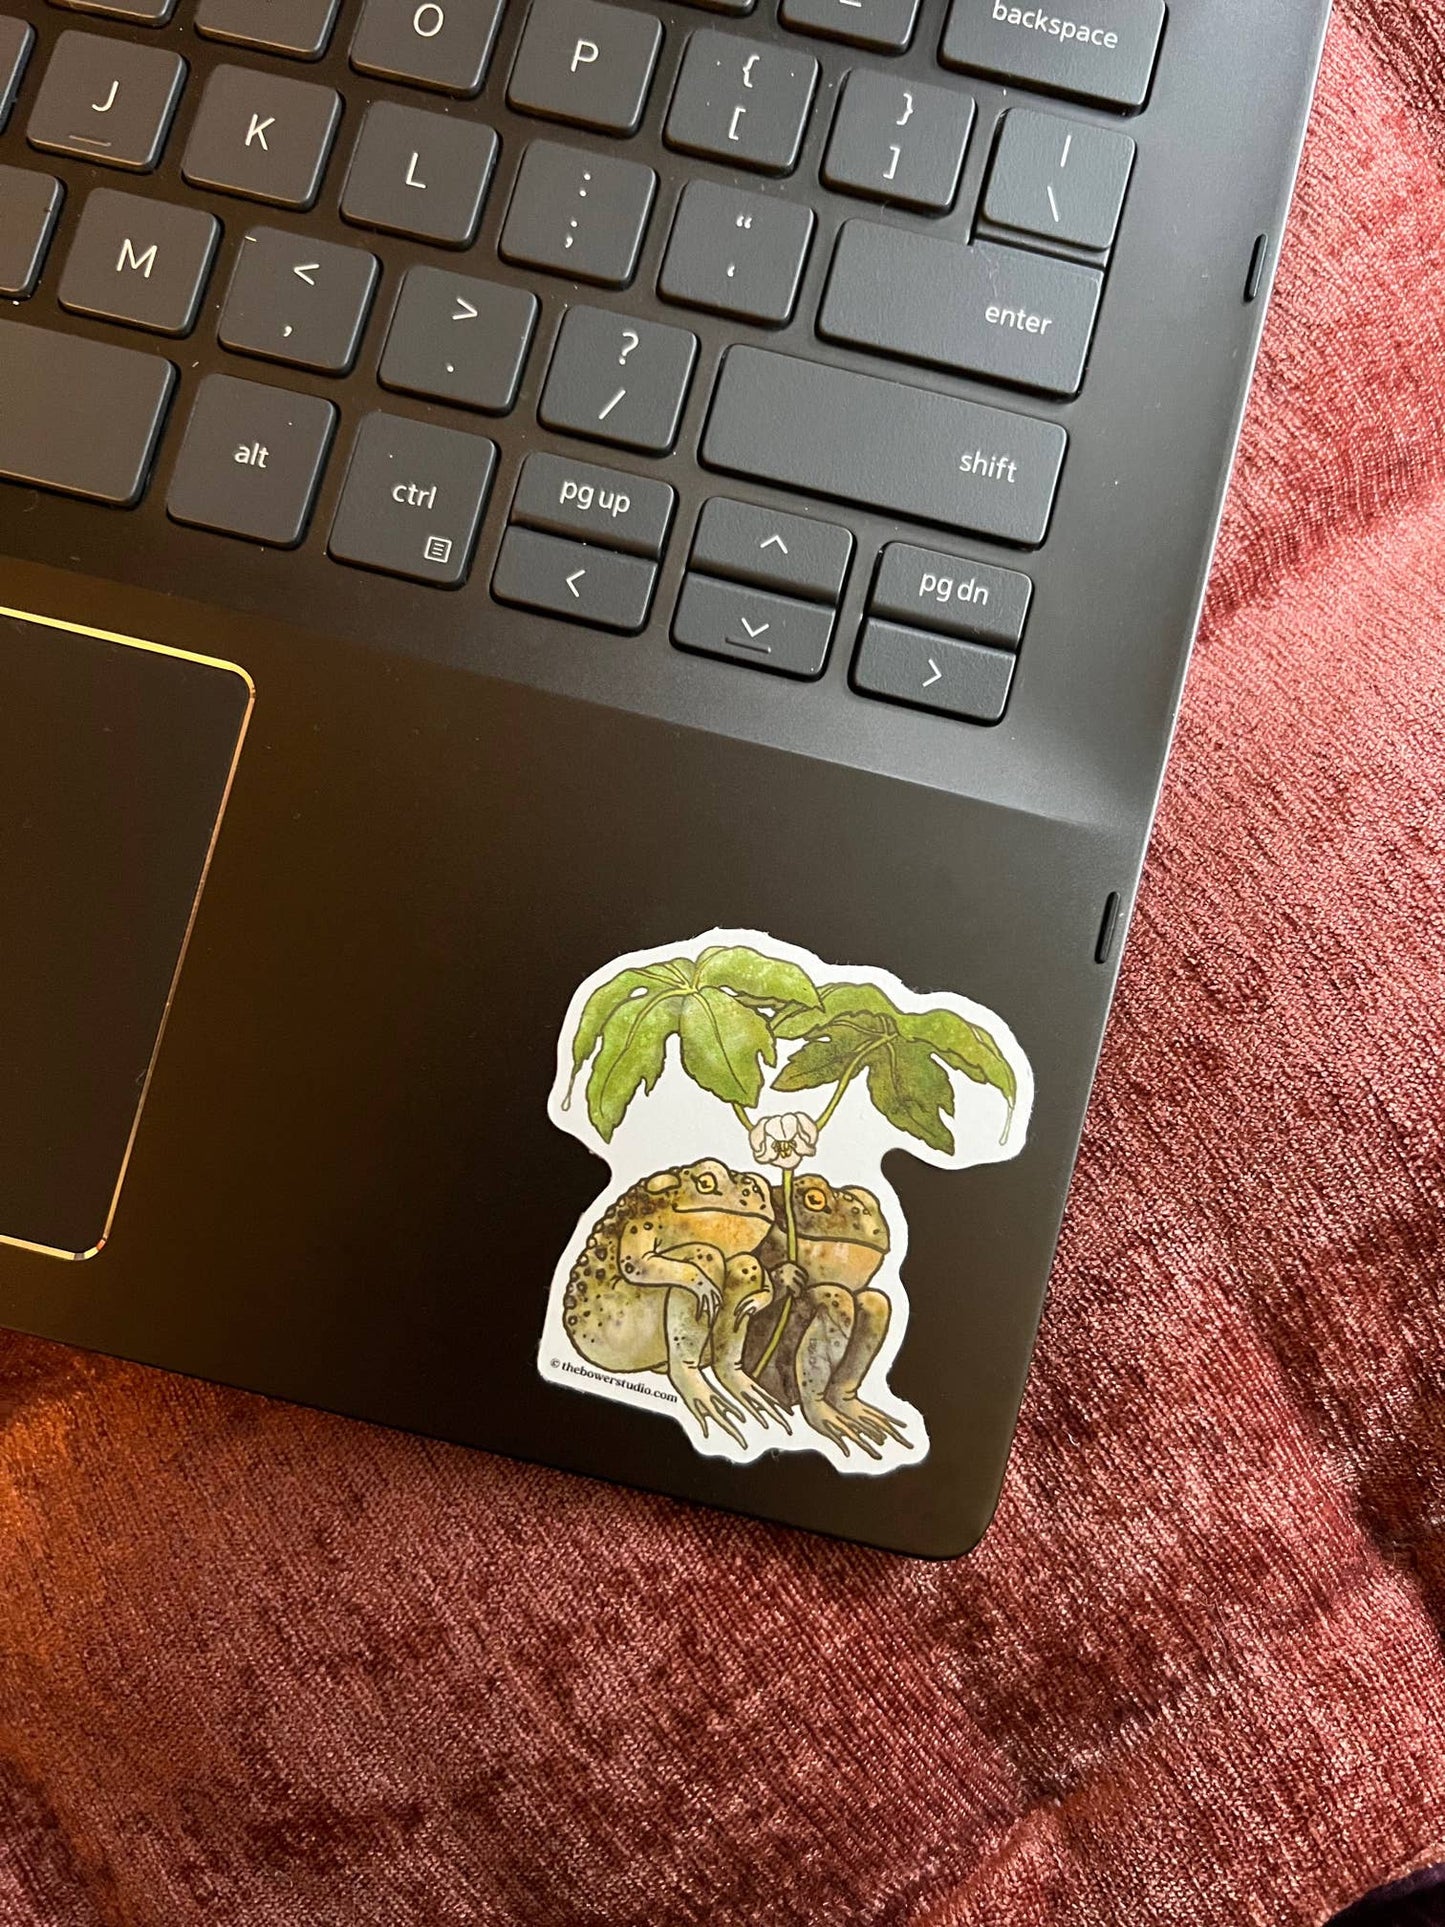 Eco-Sticker: Two Toads